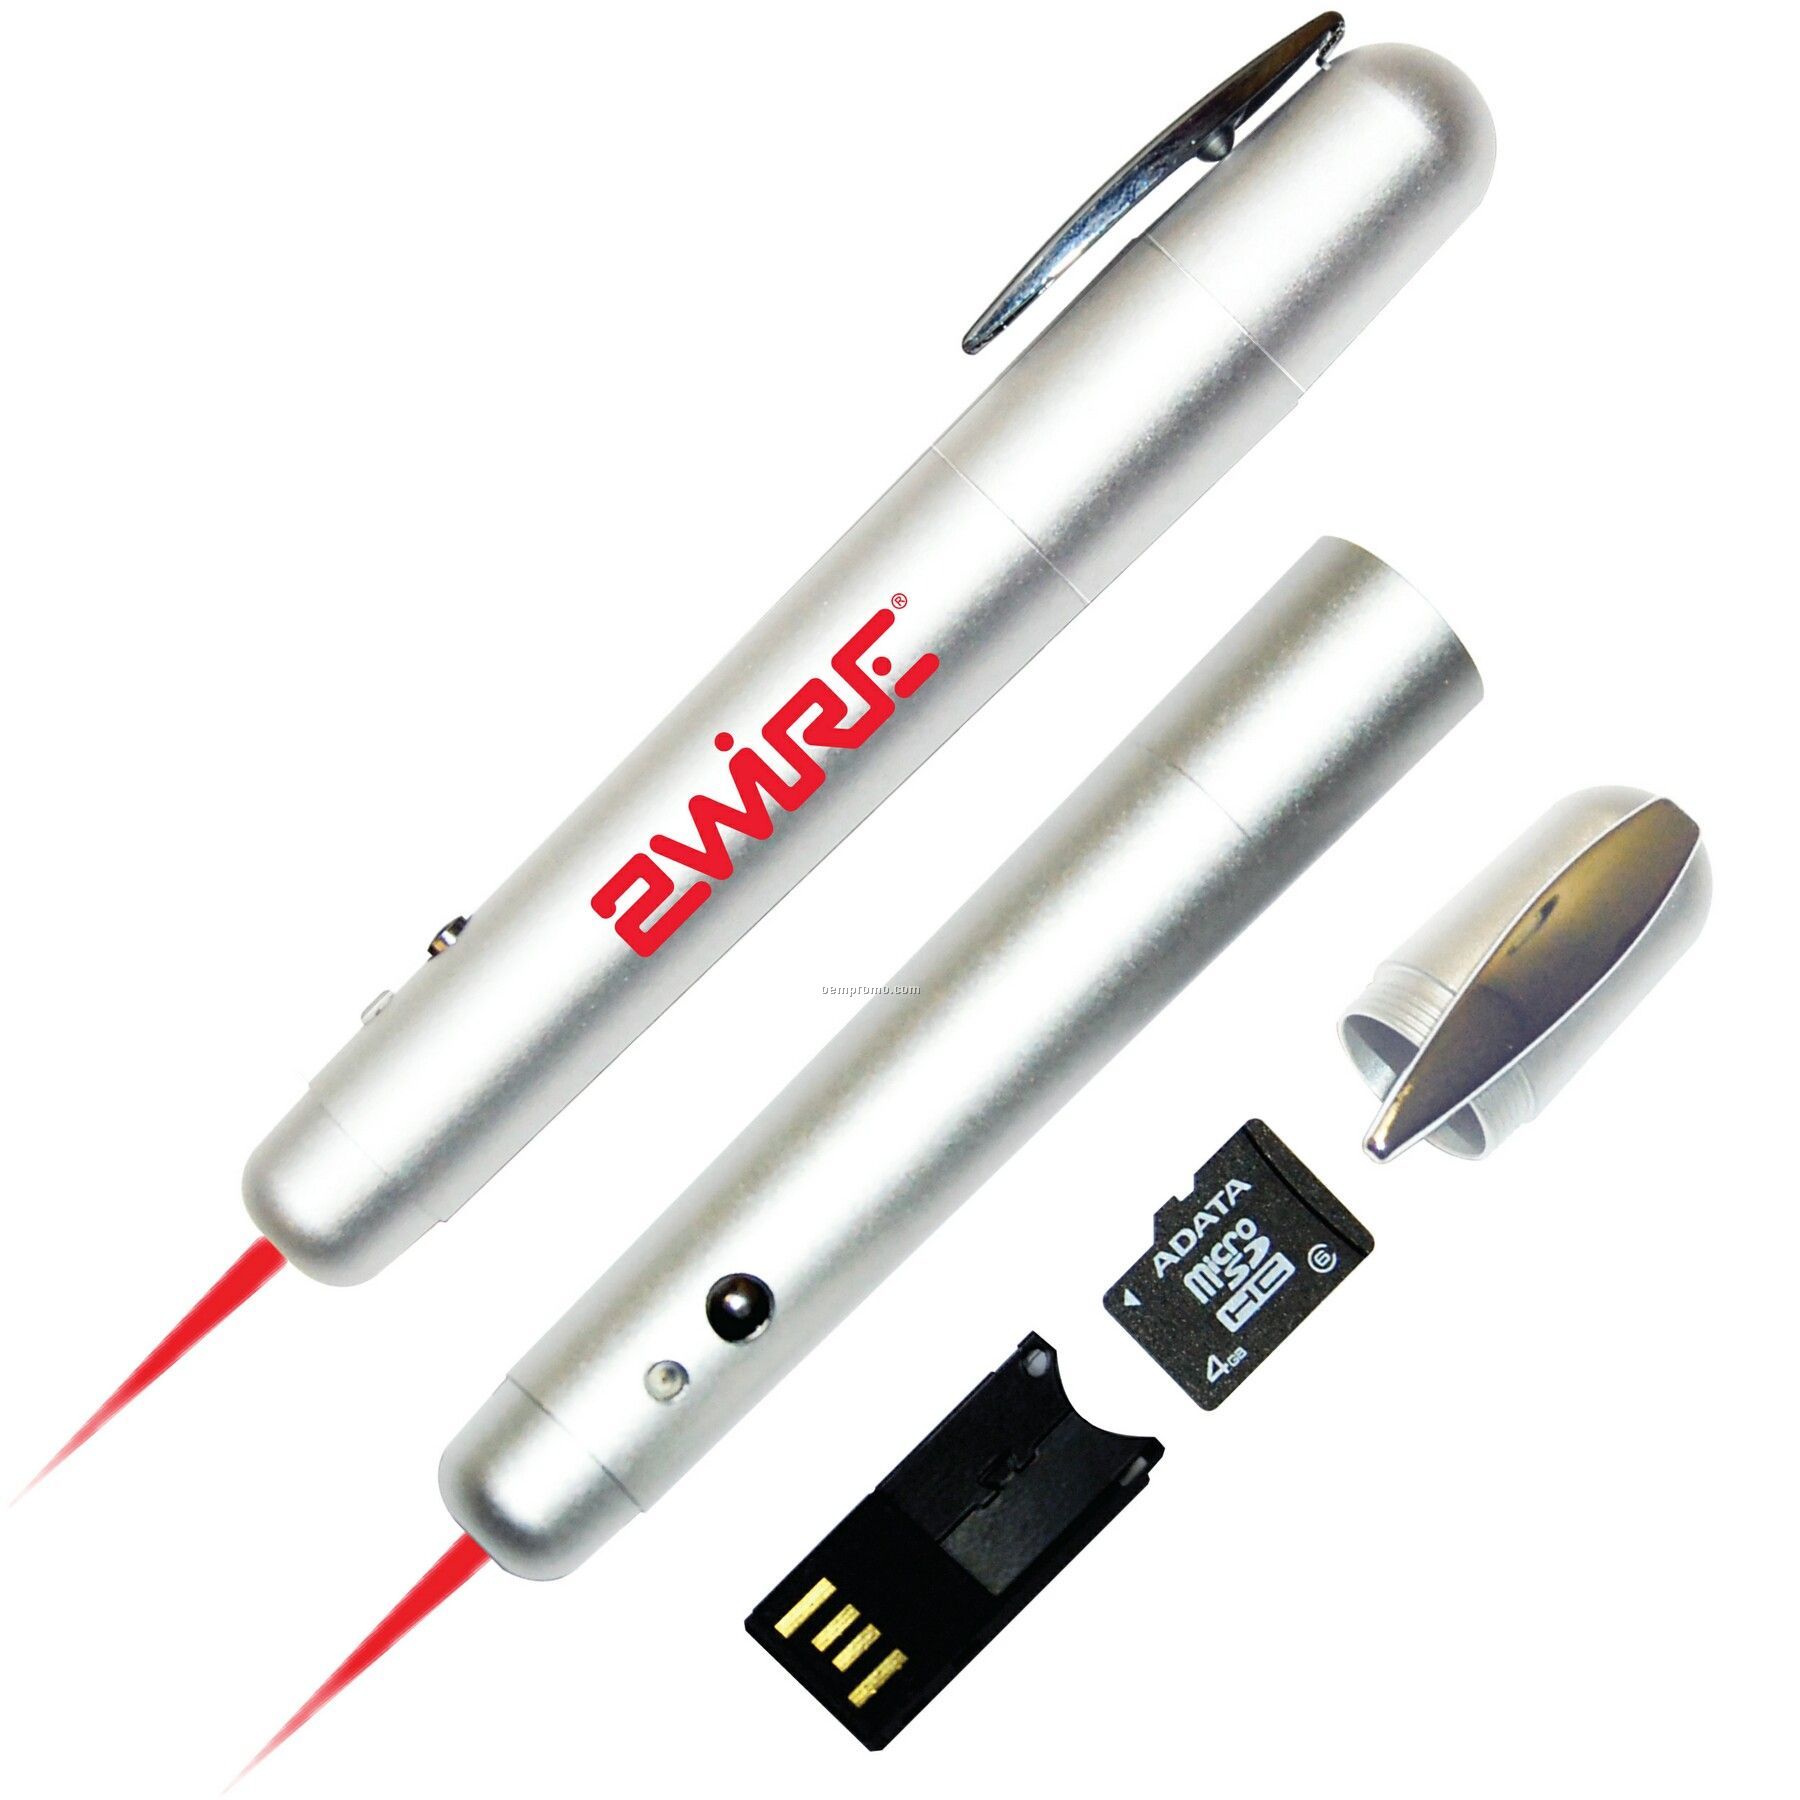 Alpec Comet USB Laser Pointer - 1 Gb